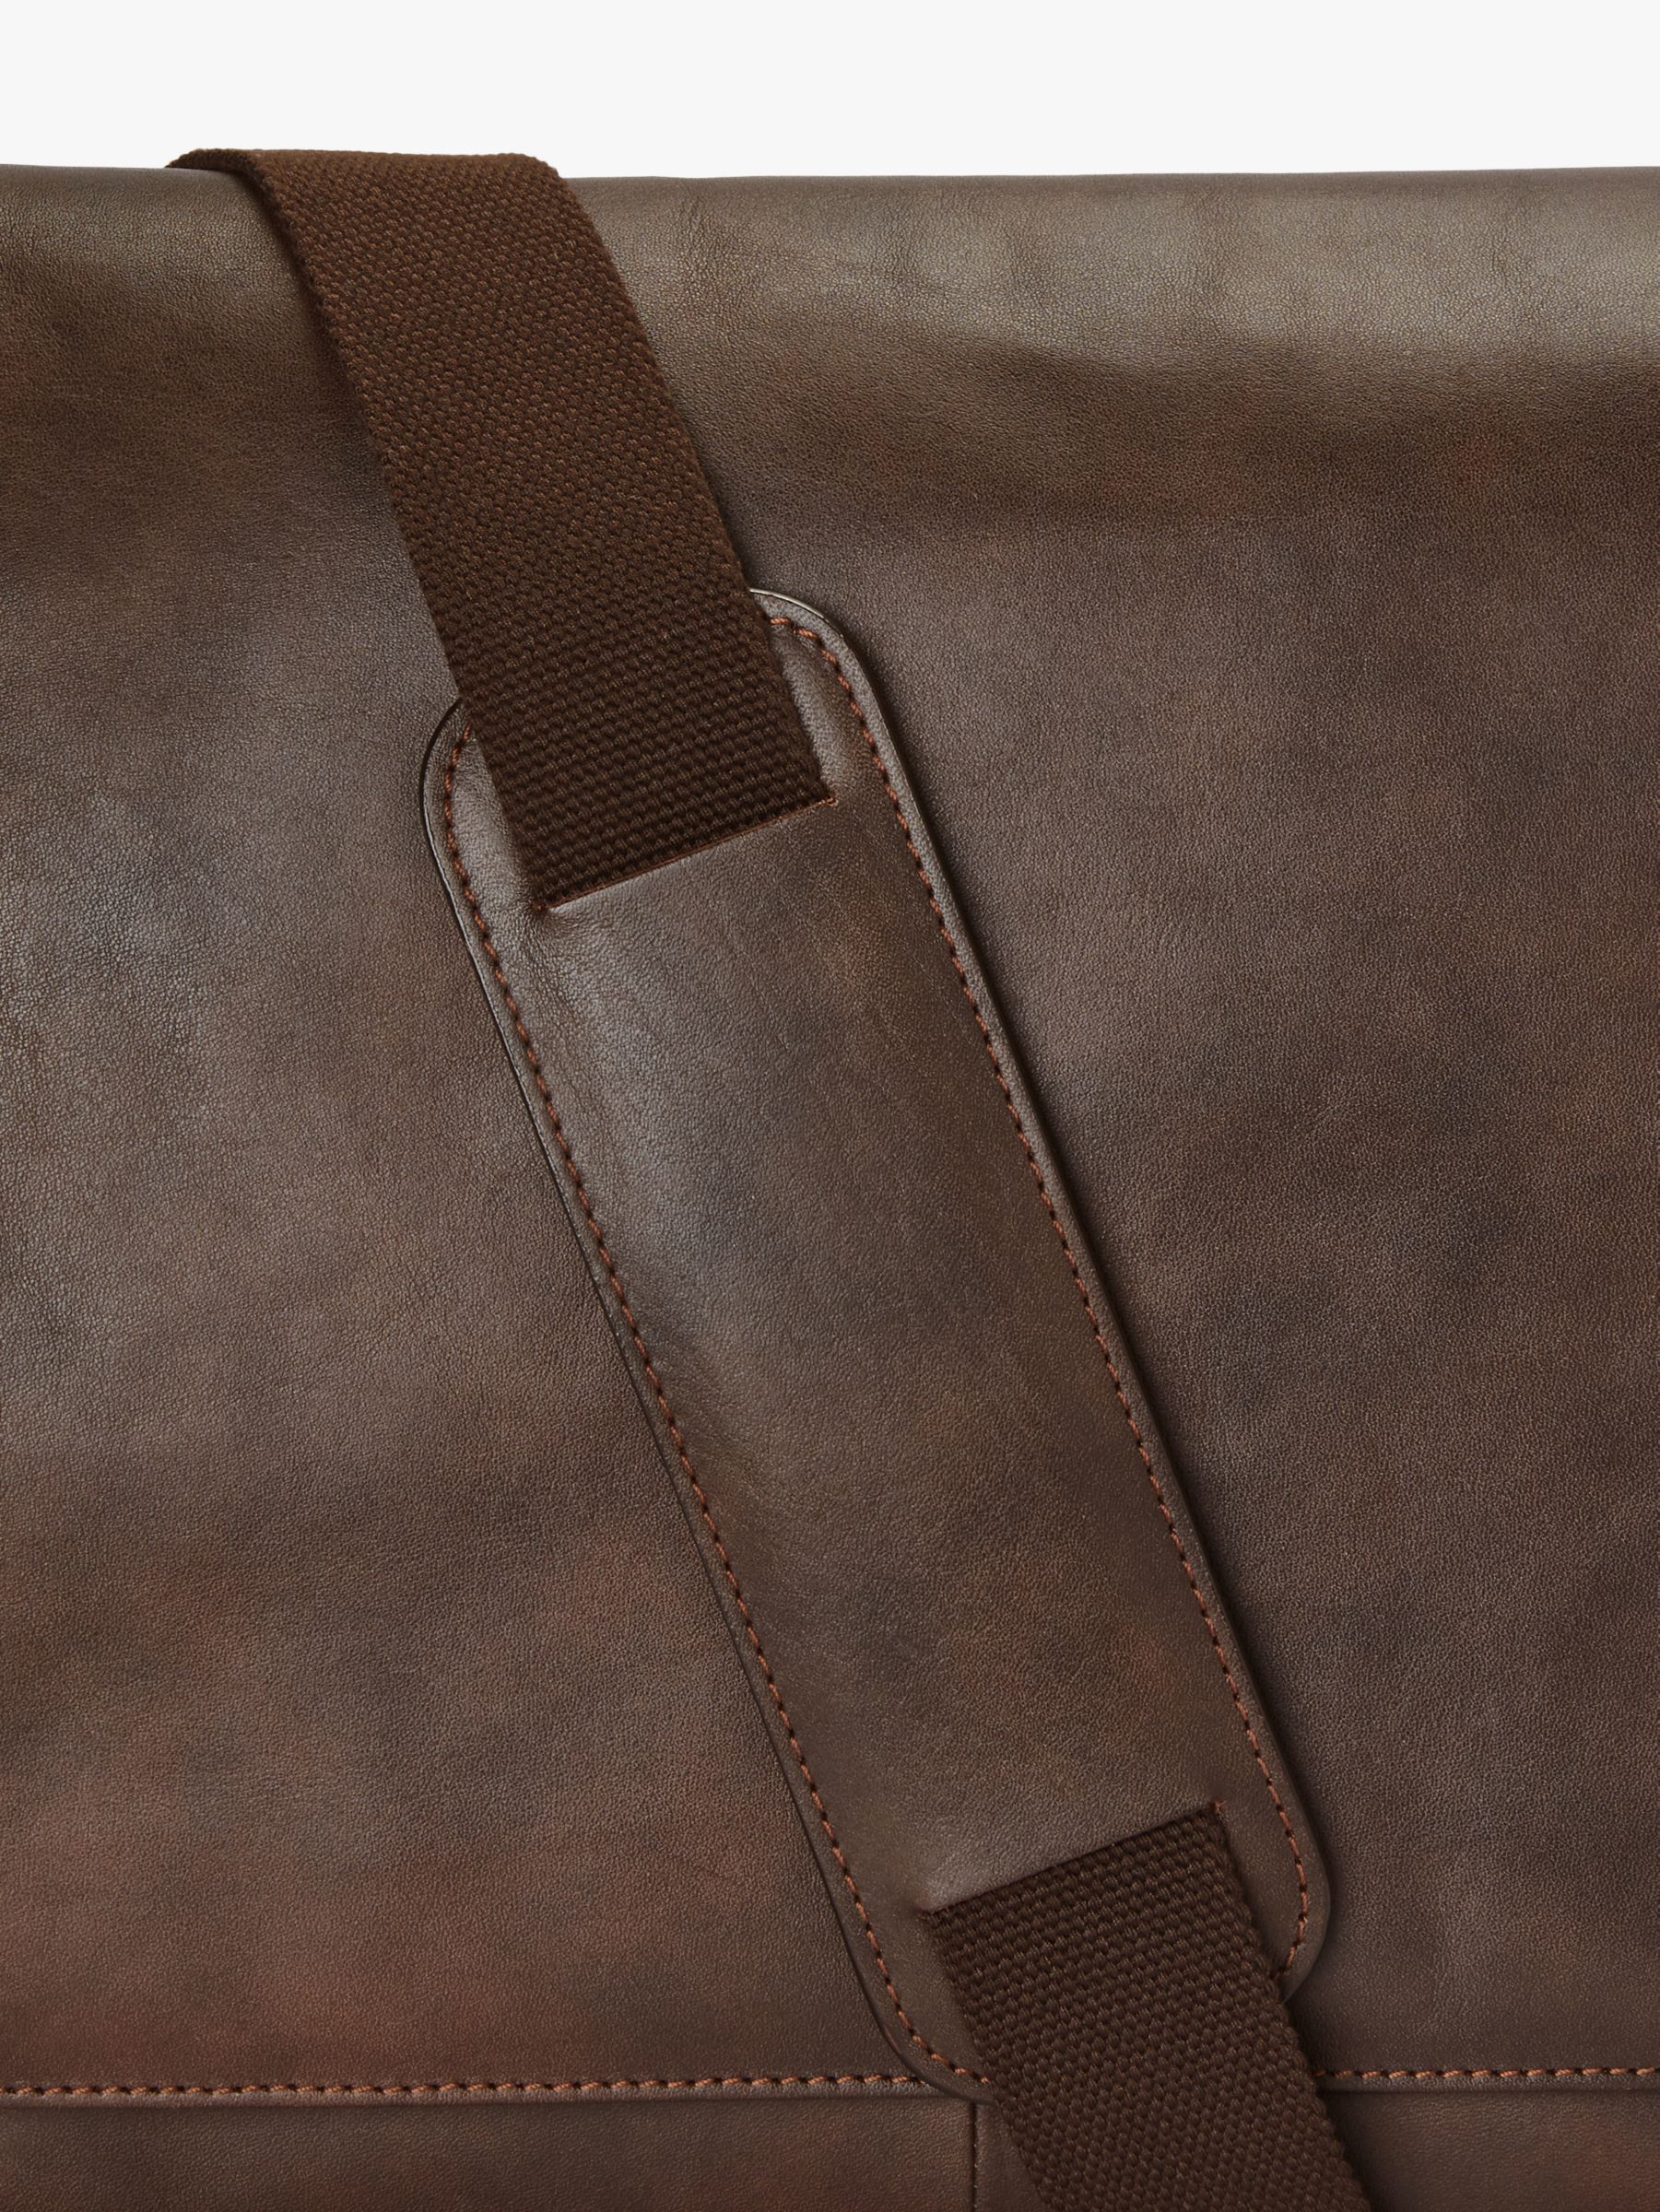 John Lewis & Partners Edinburgh Leather Messenger Bag, Brown